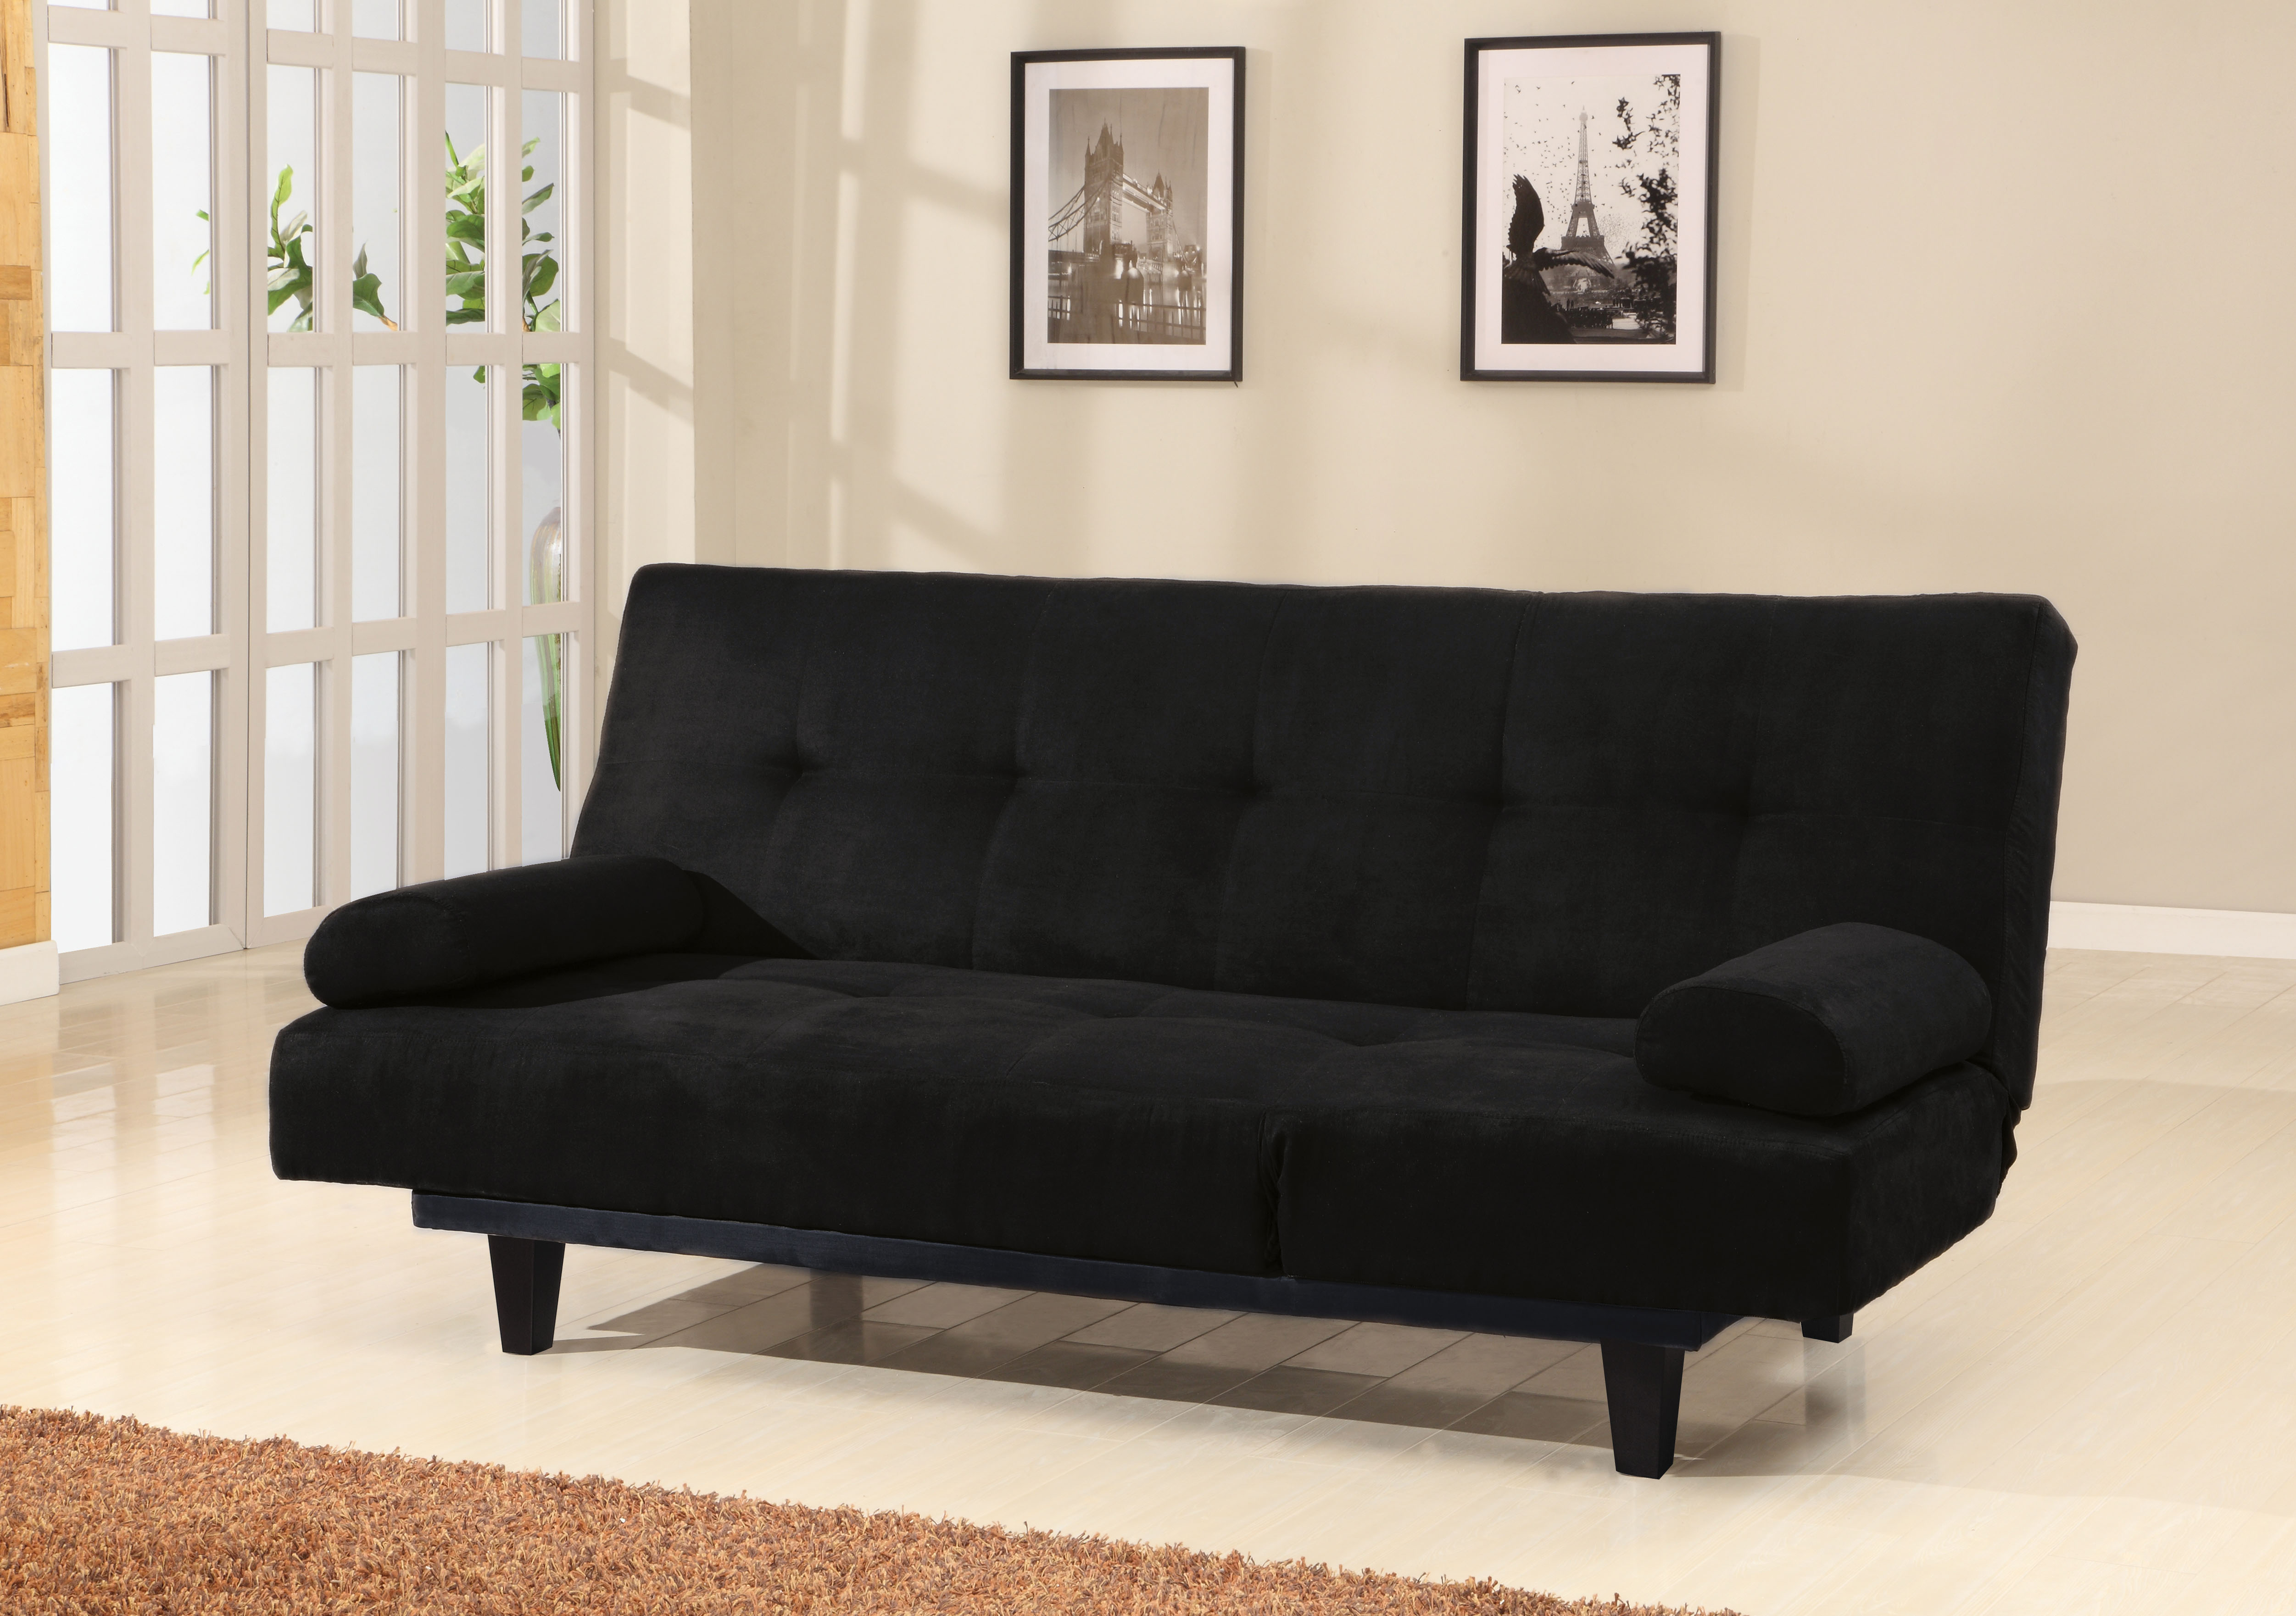 Cybil - Adjustable Sofa & 2 Pillows Black Mfb - image 1 of 2